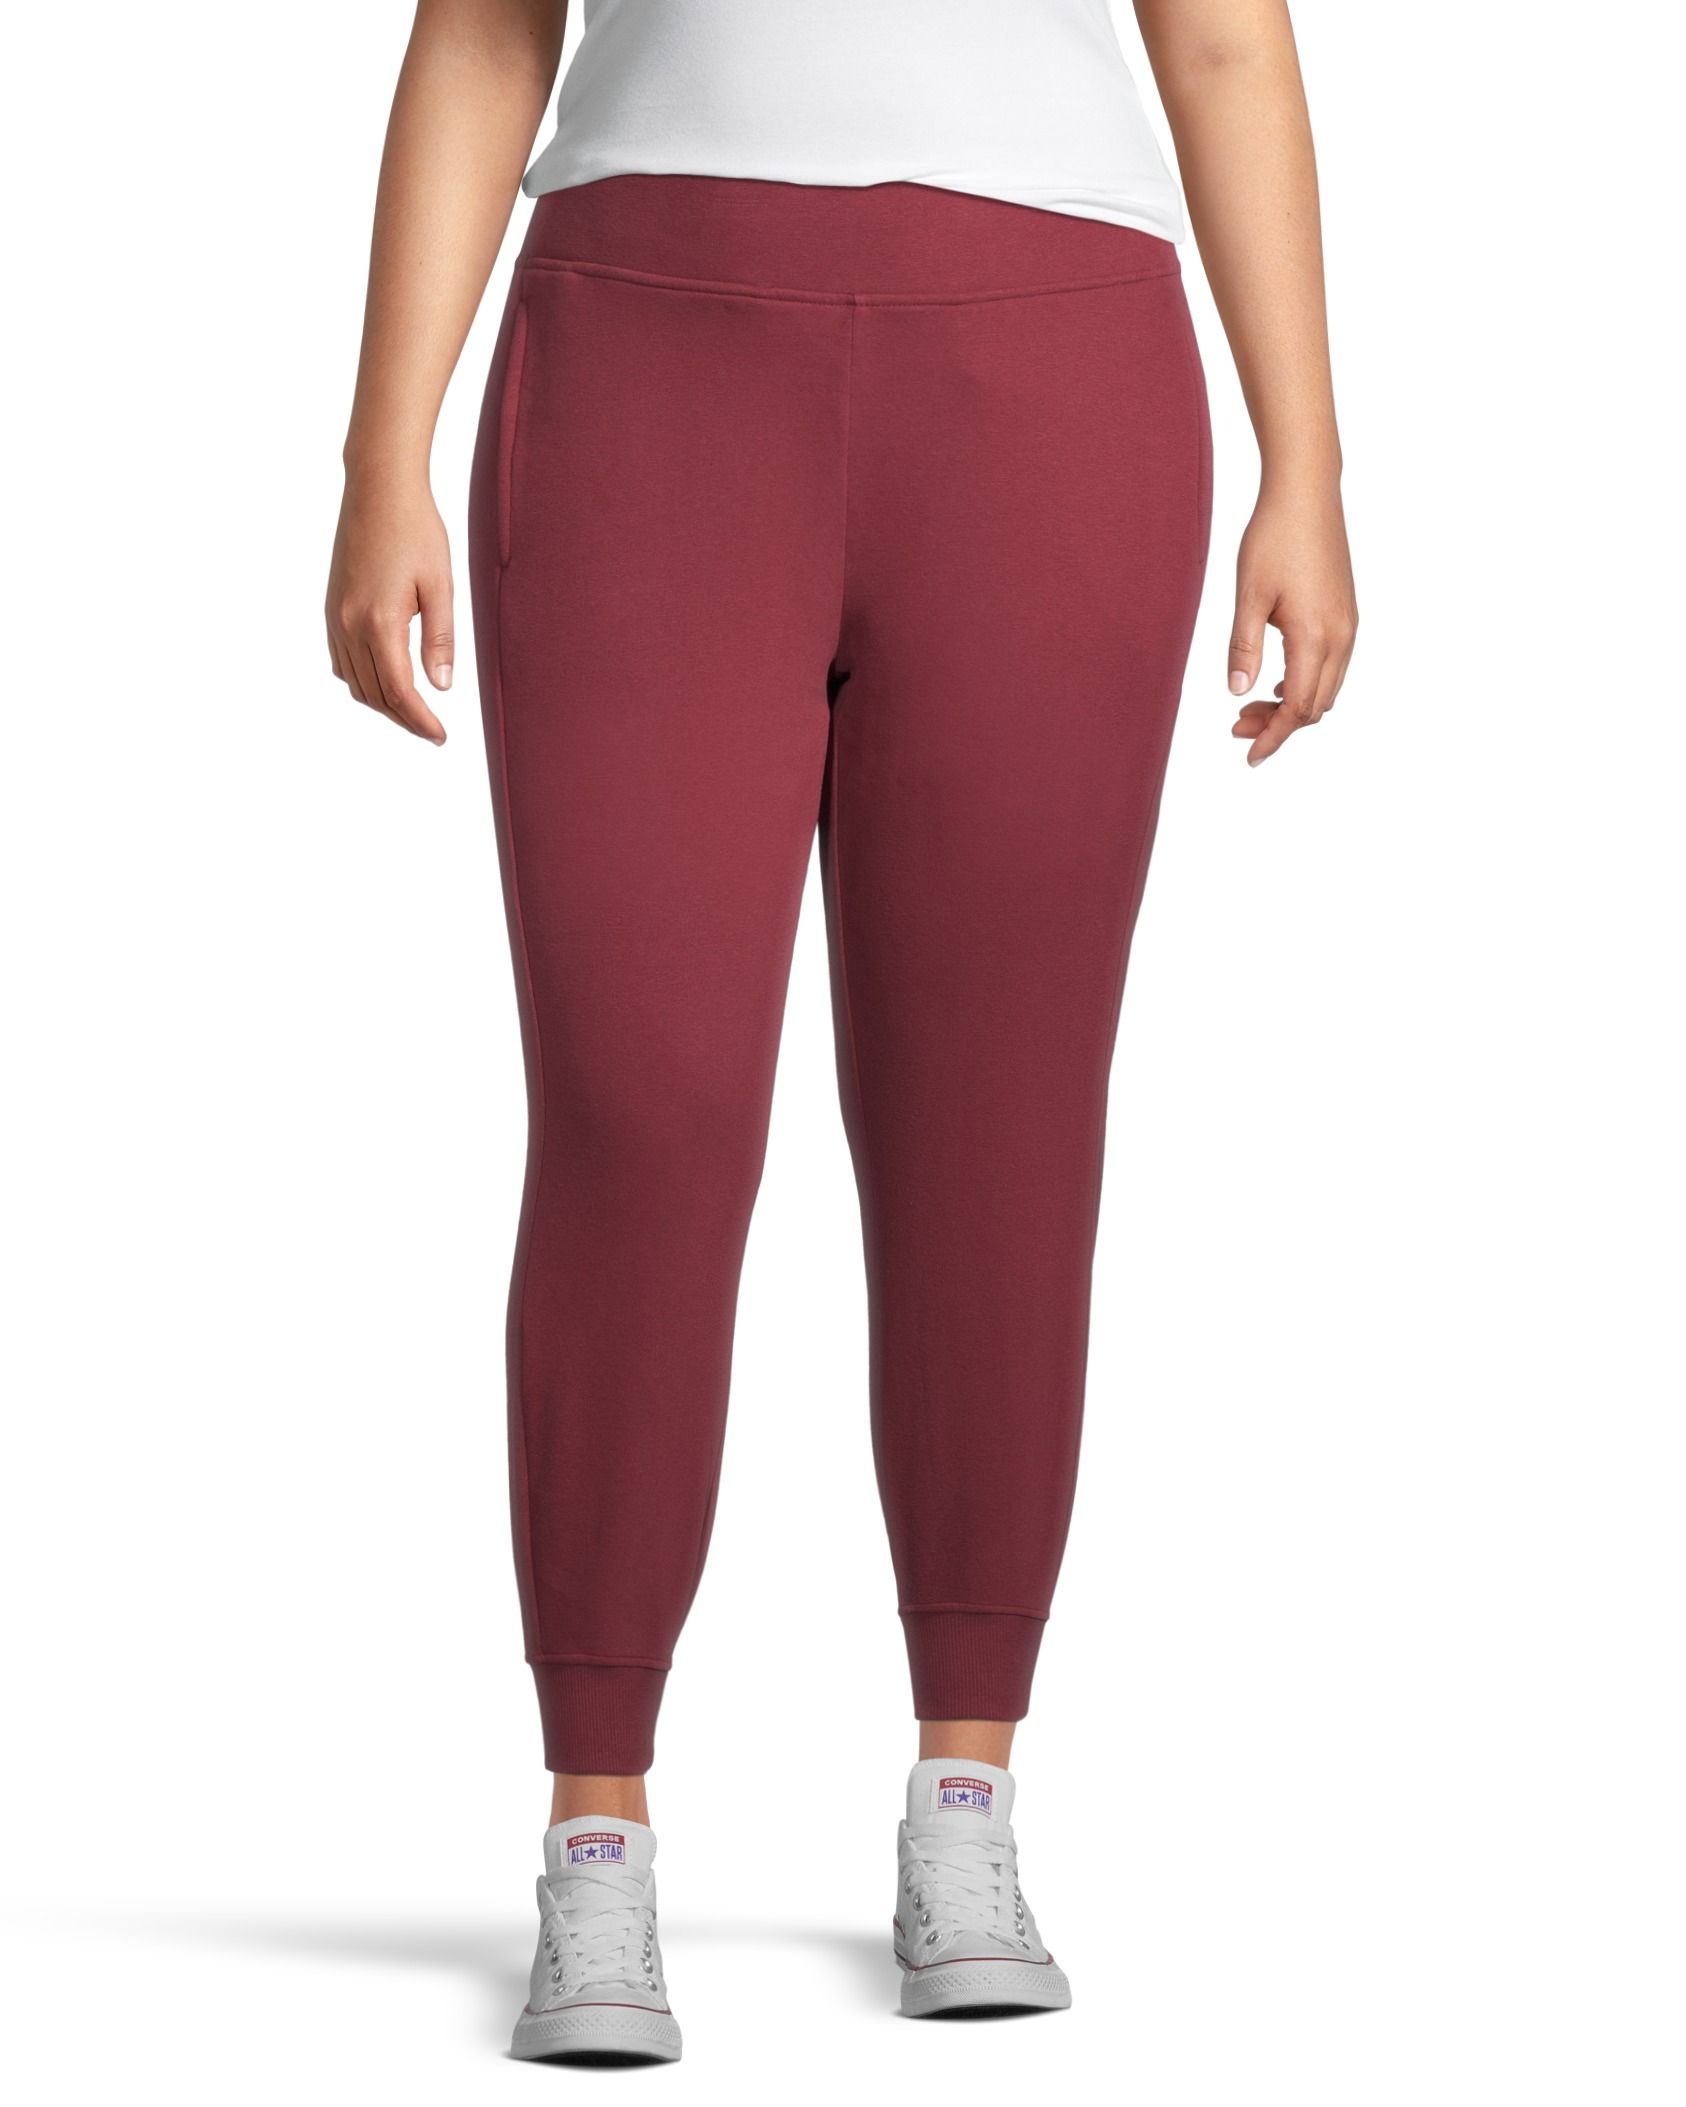 Converse Embroidered Star Chevron Pant Women's Sweat Pants Burgundy Size S  | eBay